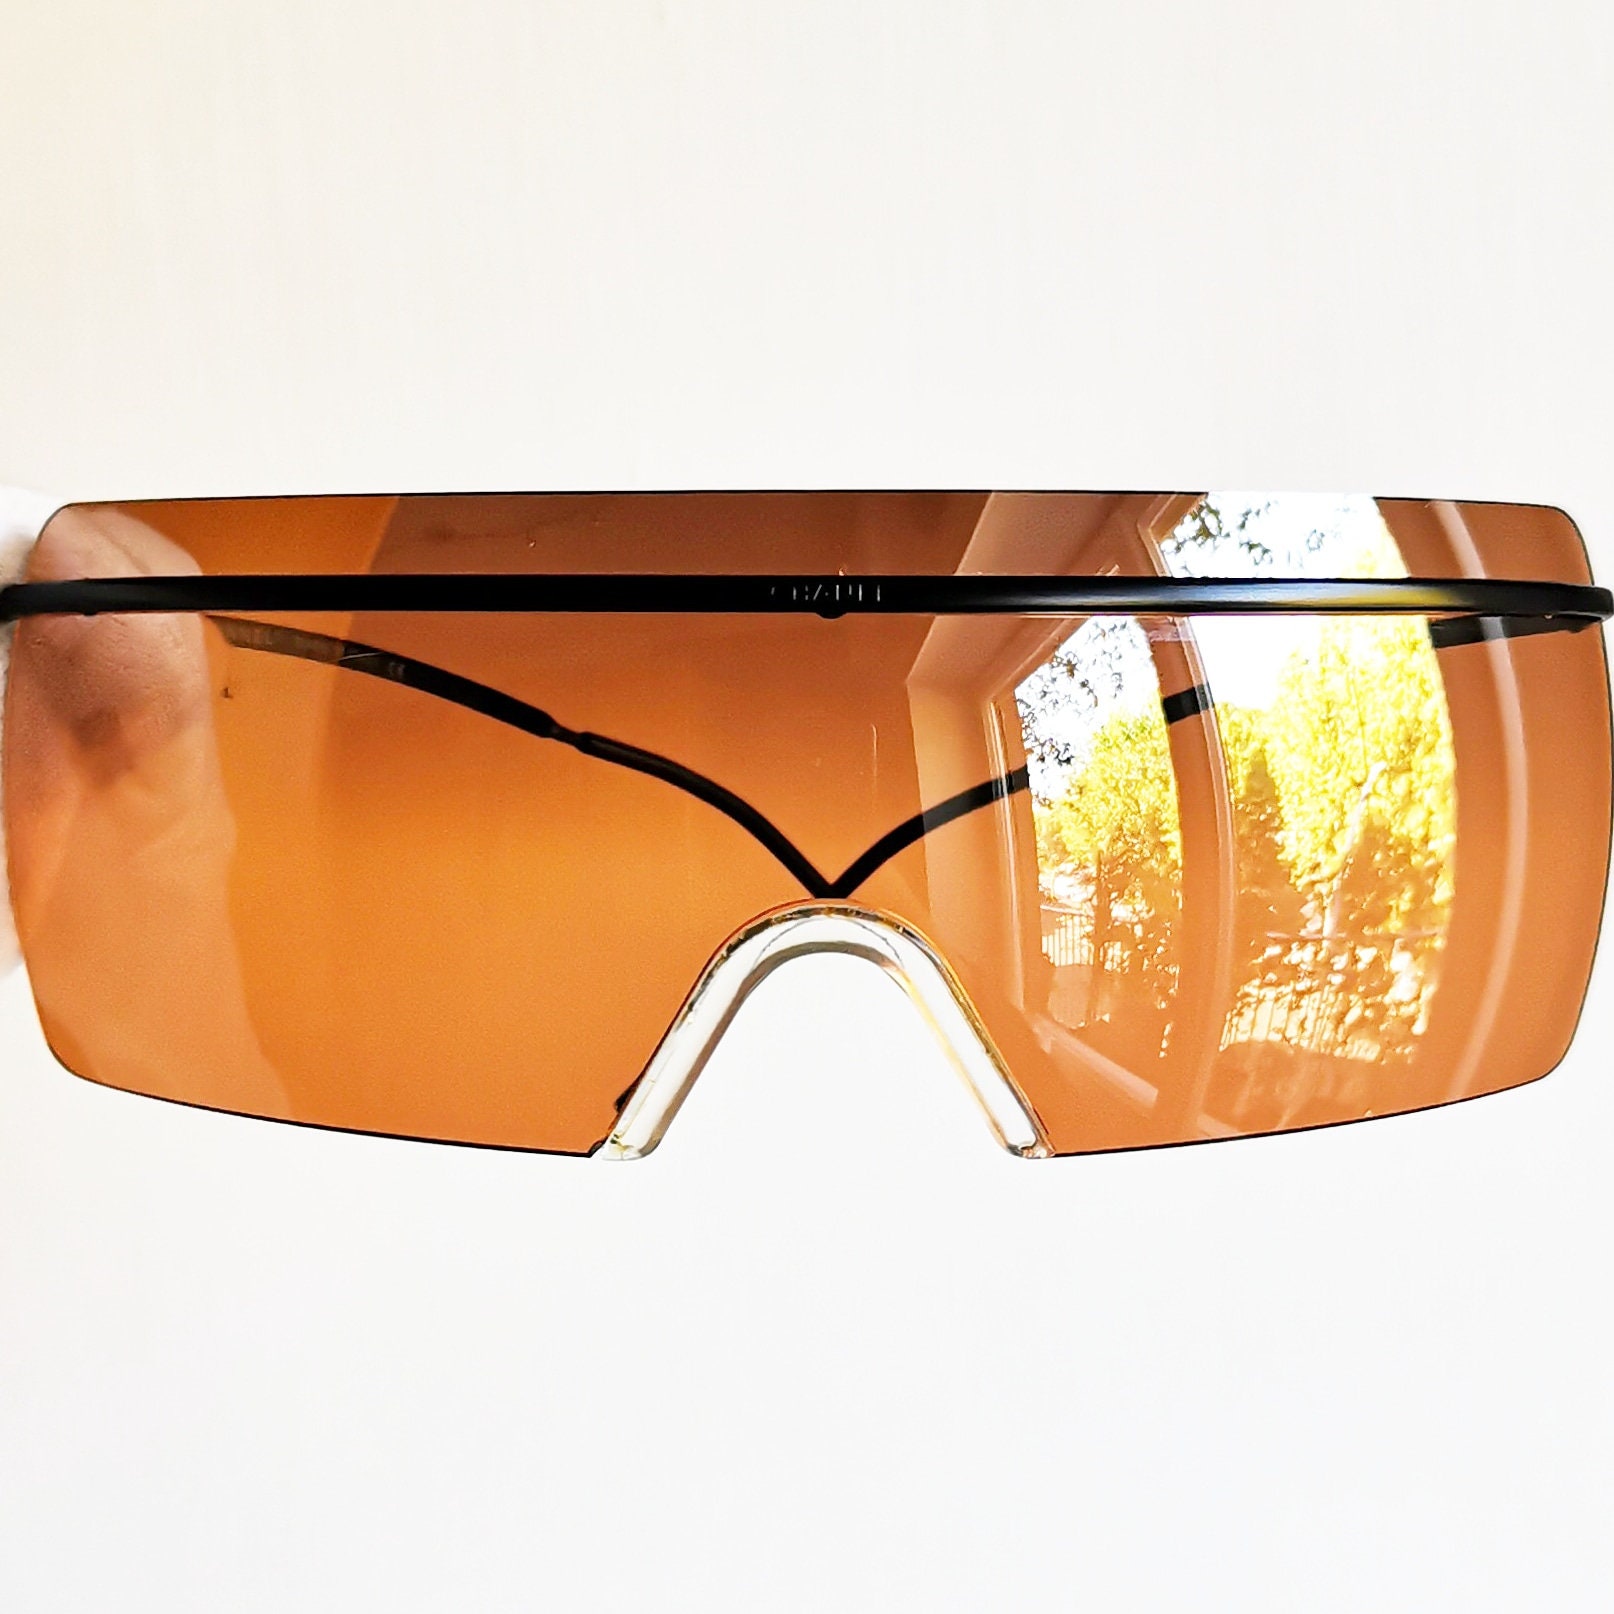 CHANEL Sunglasses Oversize Visor Mask Vintage Rare Square 